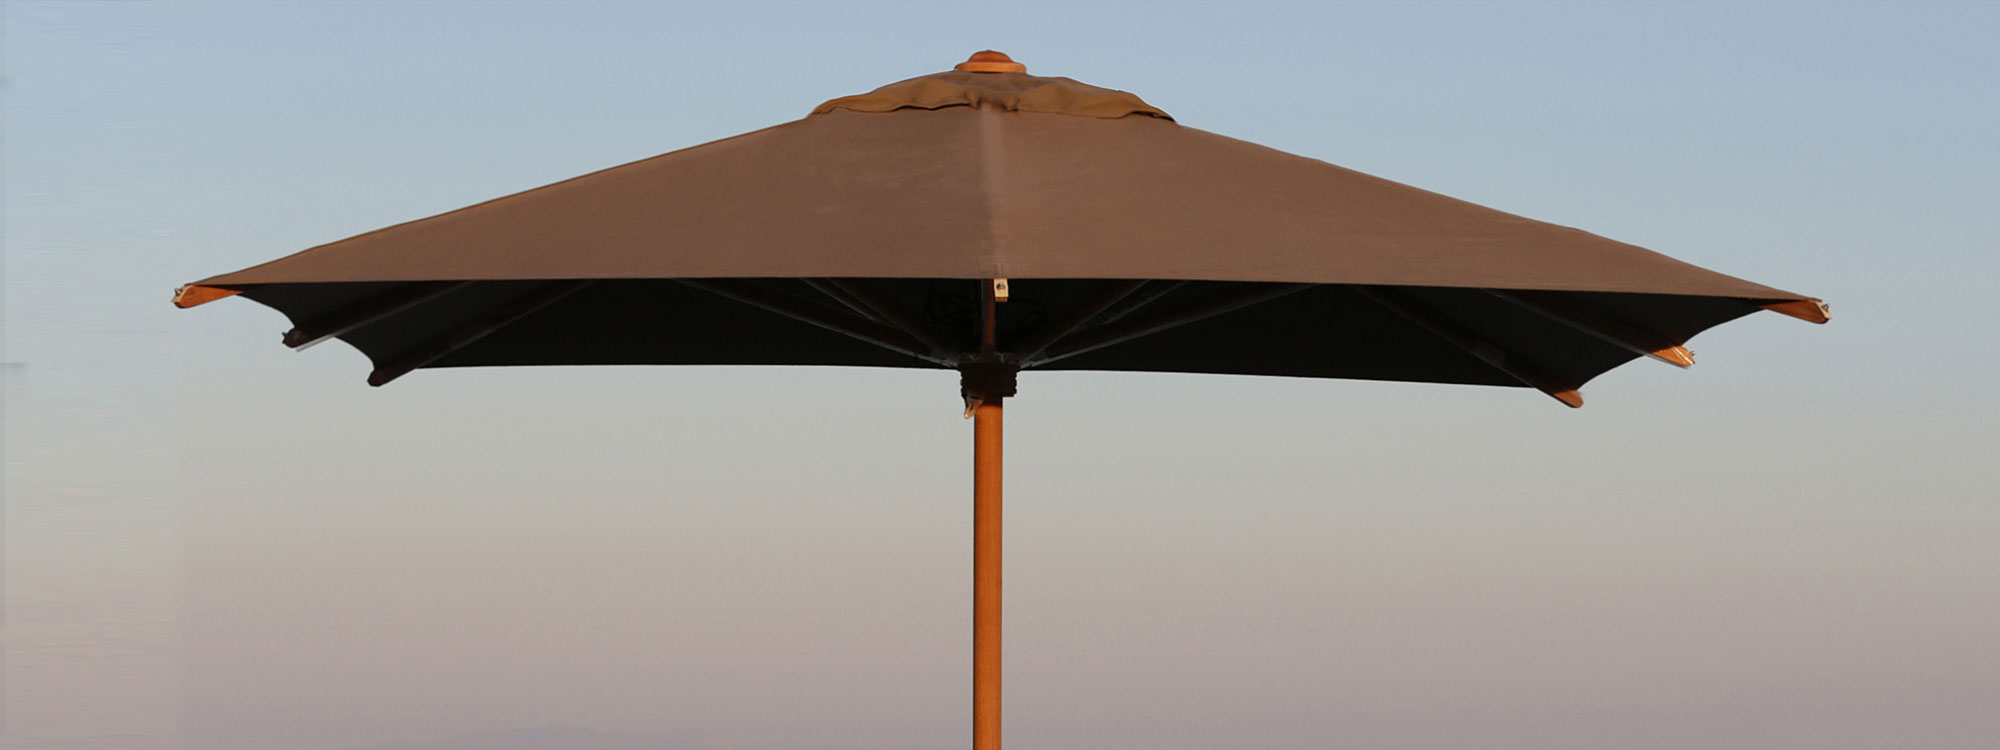 Shady classic Teak parasol is a parasol in high quality teak sun shade materials by Royal Botania garden furniture company